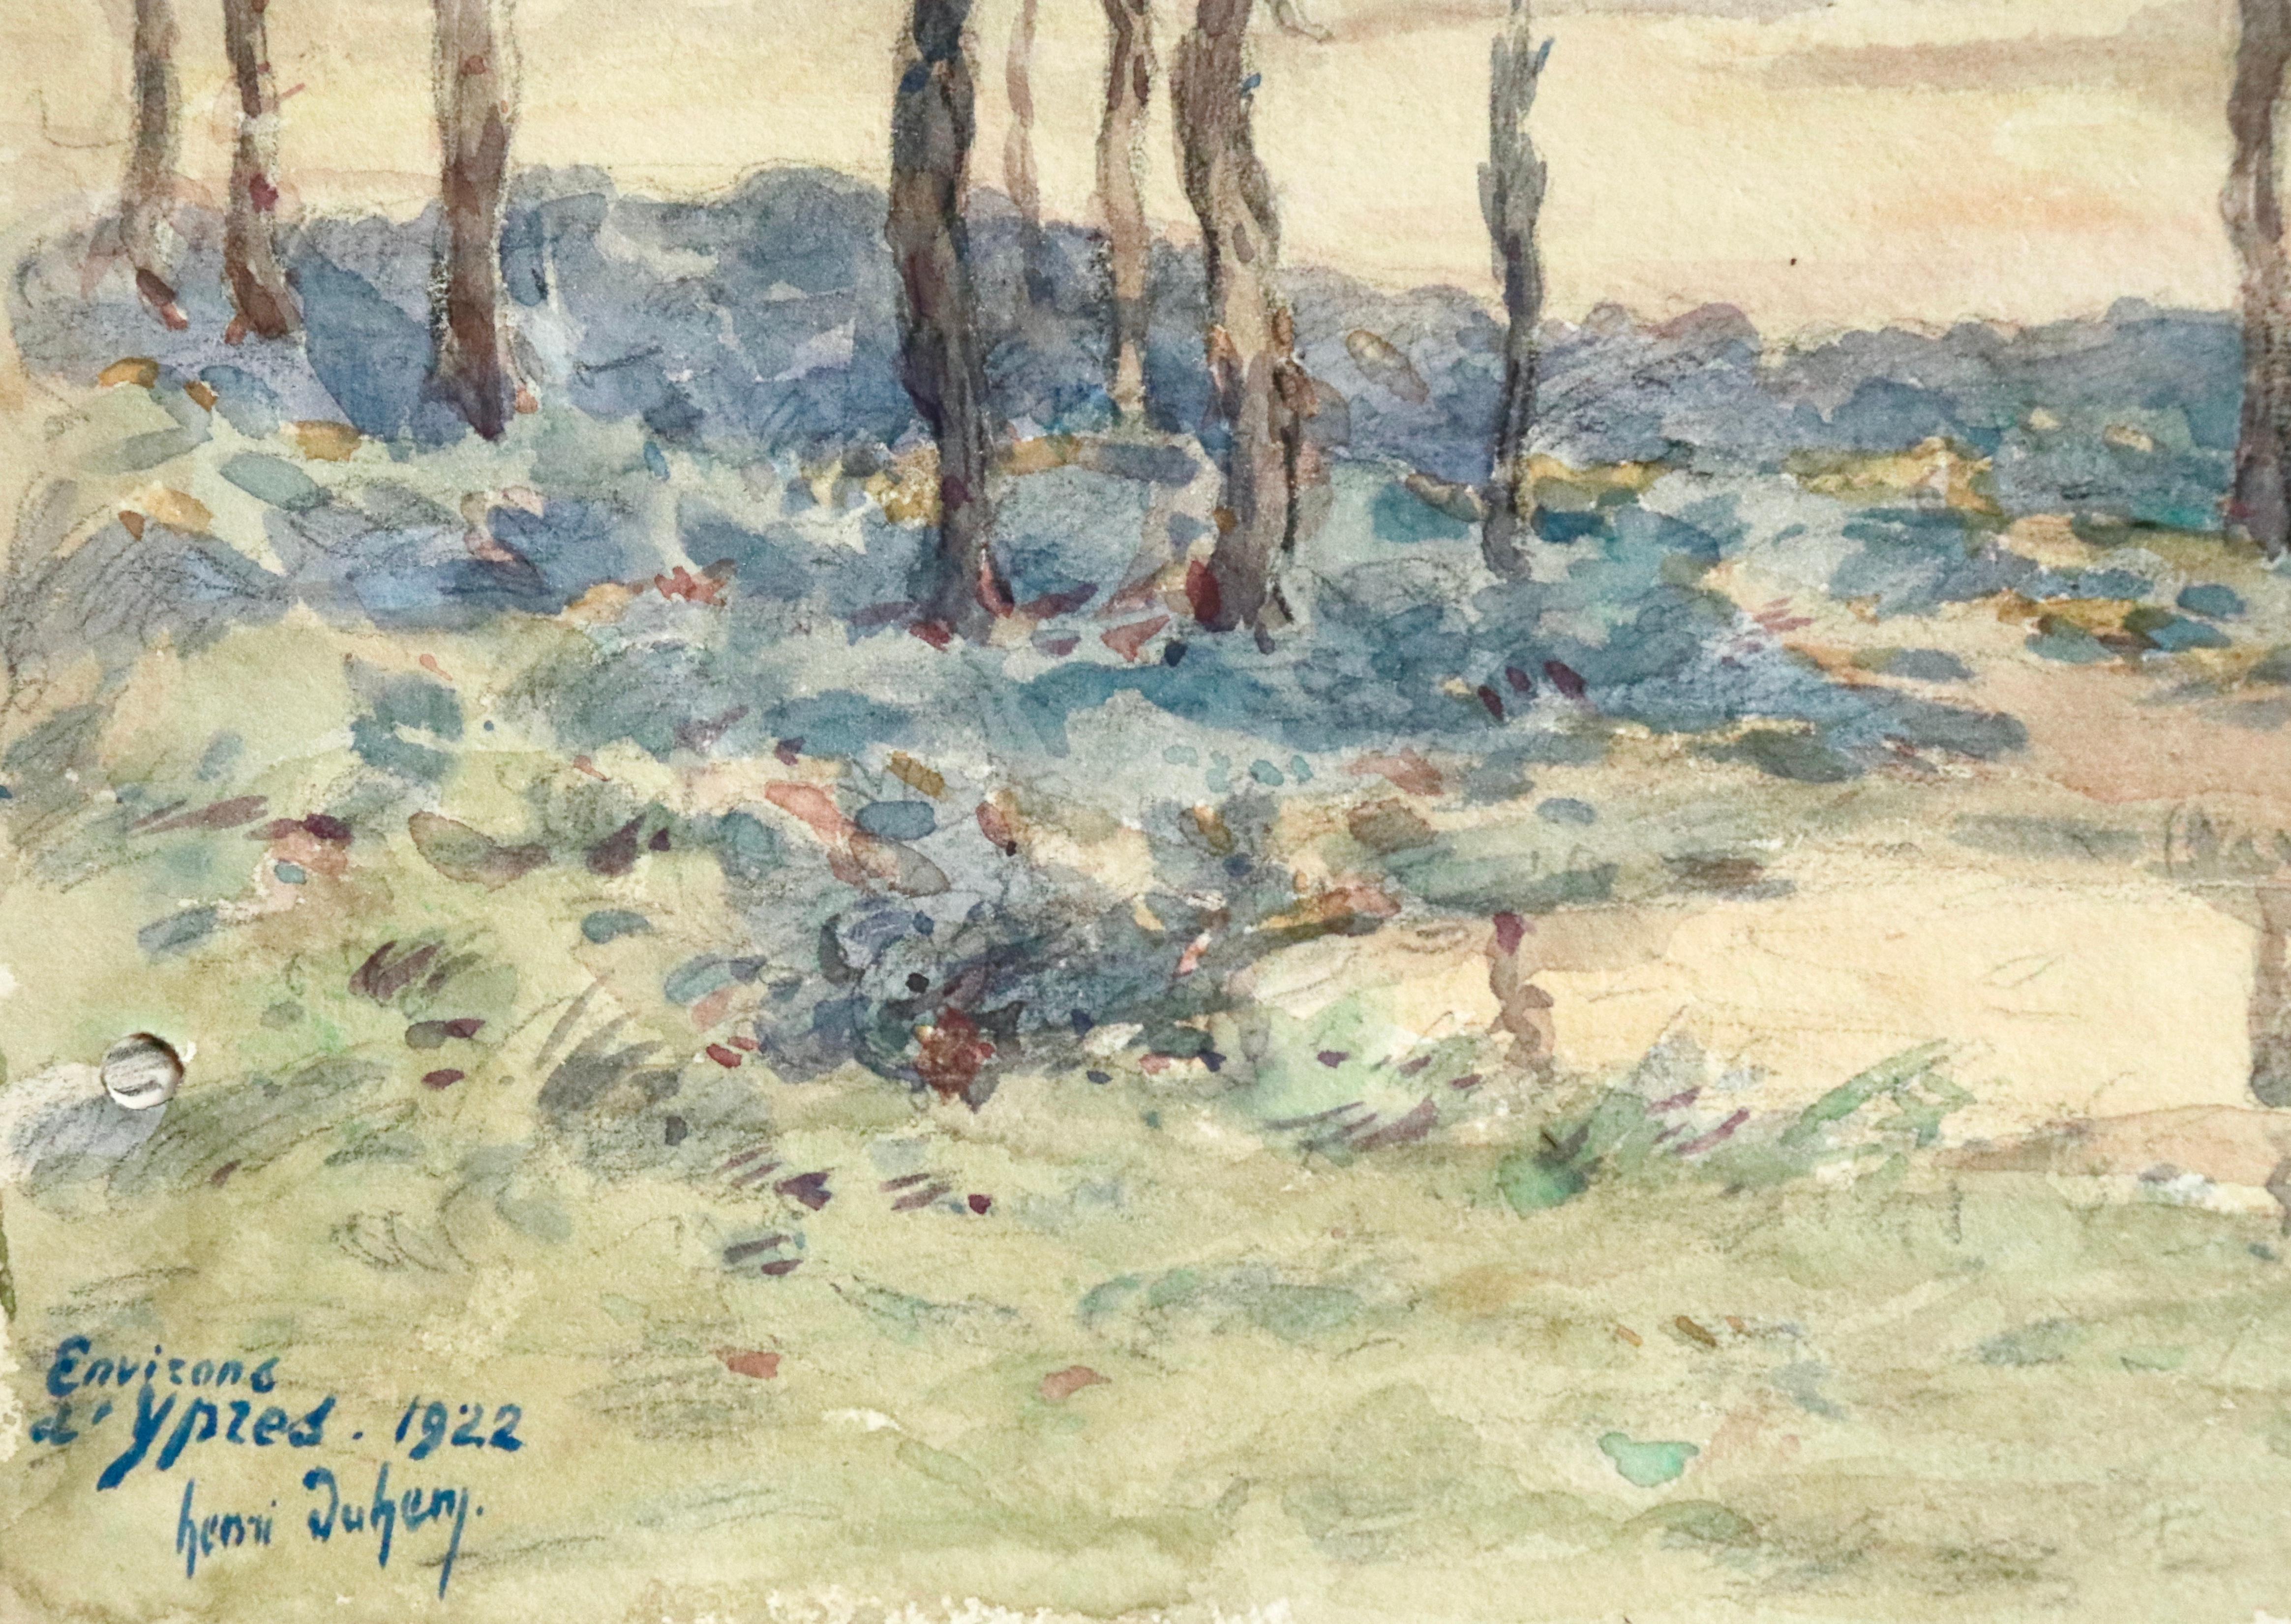 Environs d'Ypres - 19th Century Watercolor, World War I Landscape by Henri Duhem For Sale 1